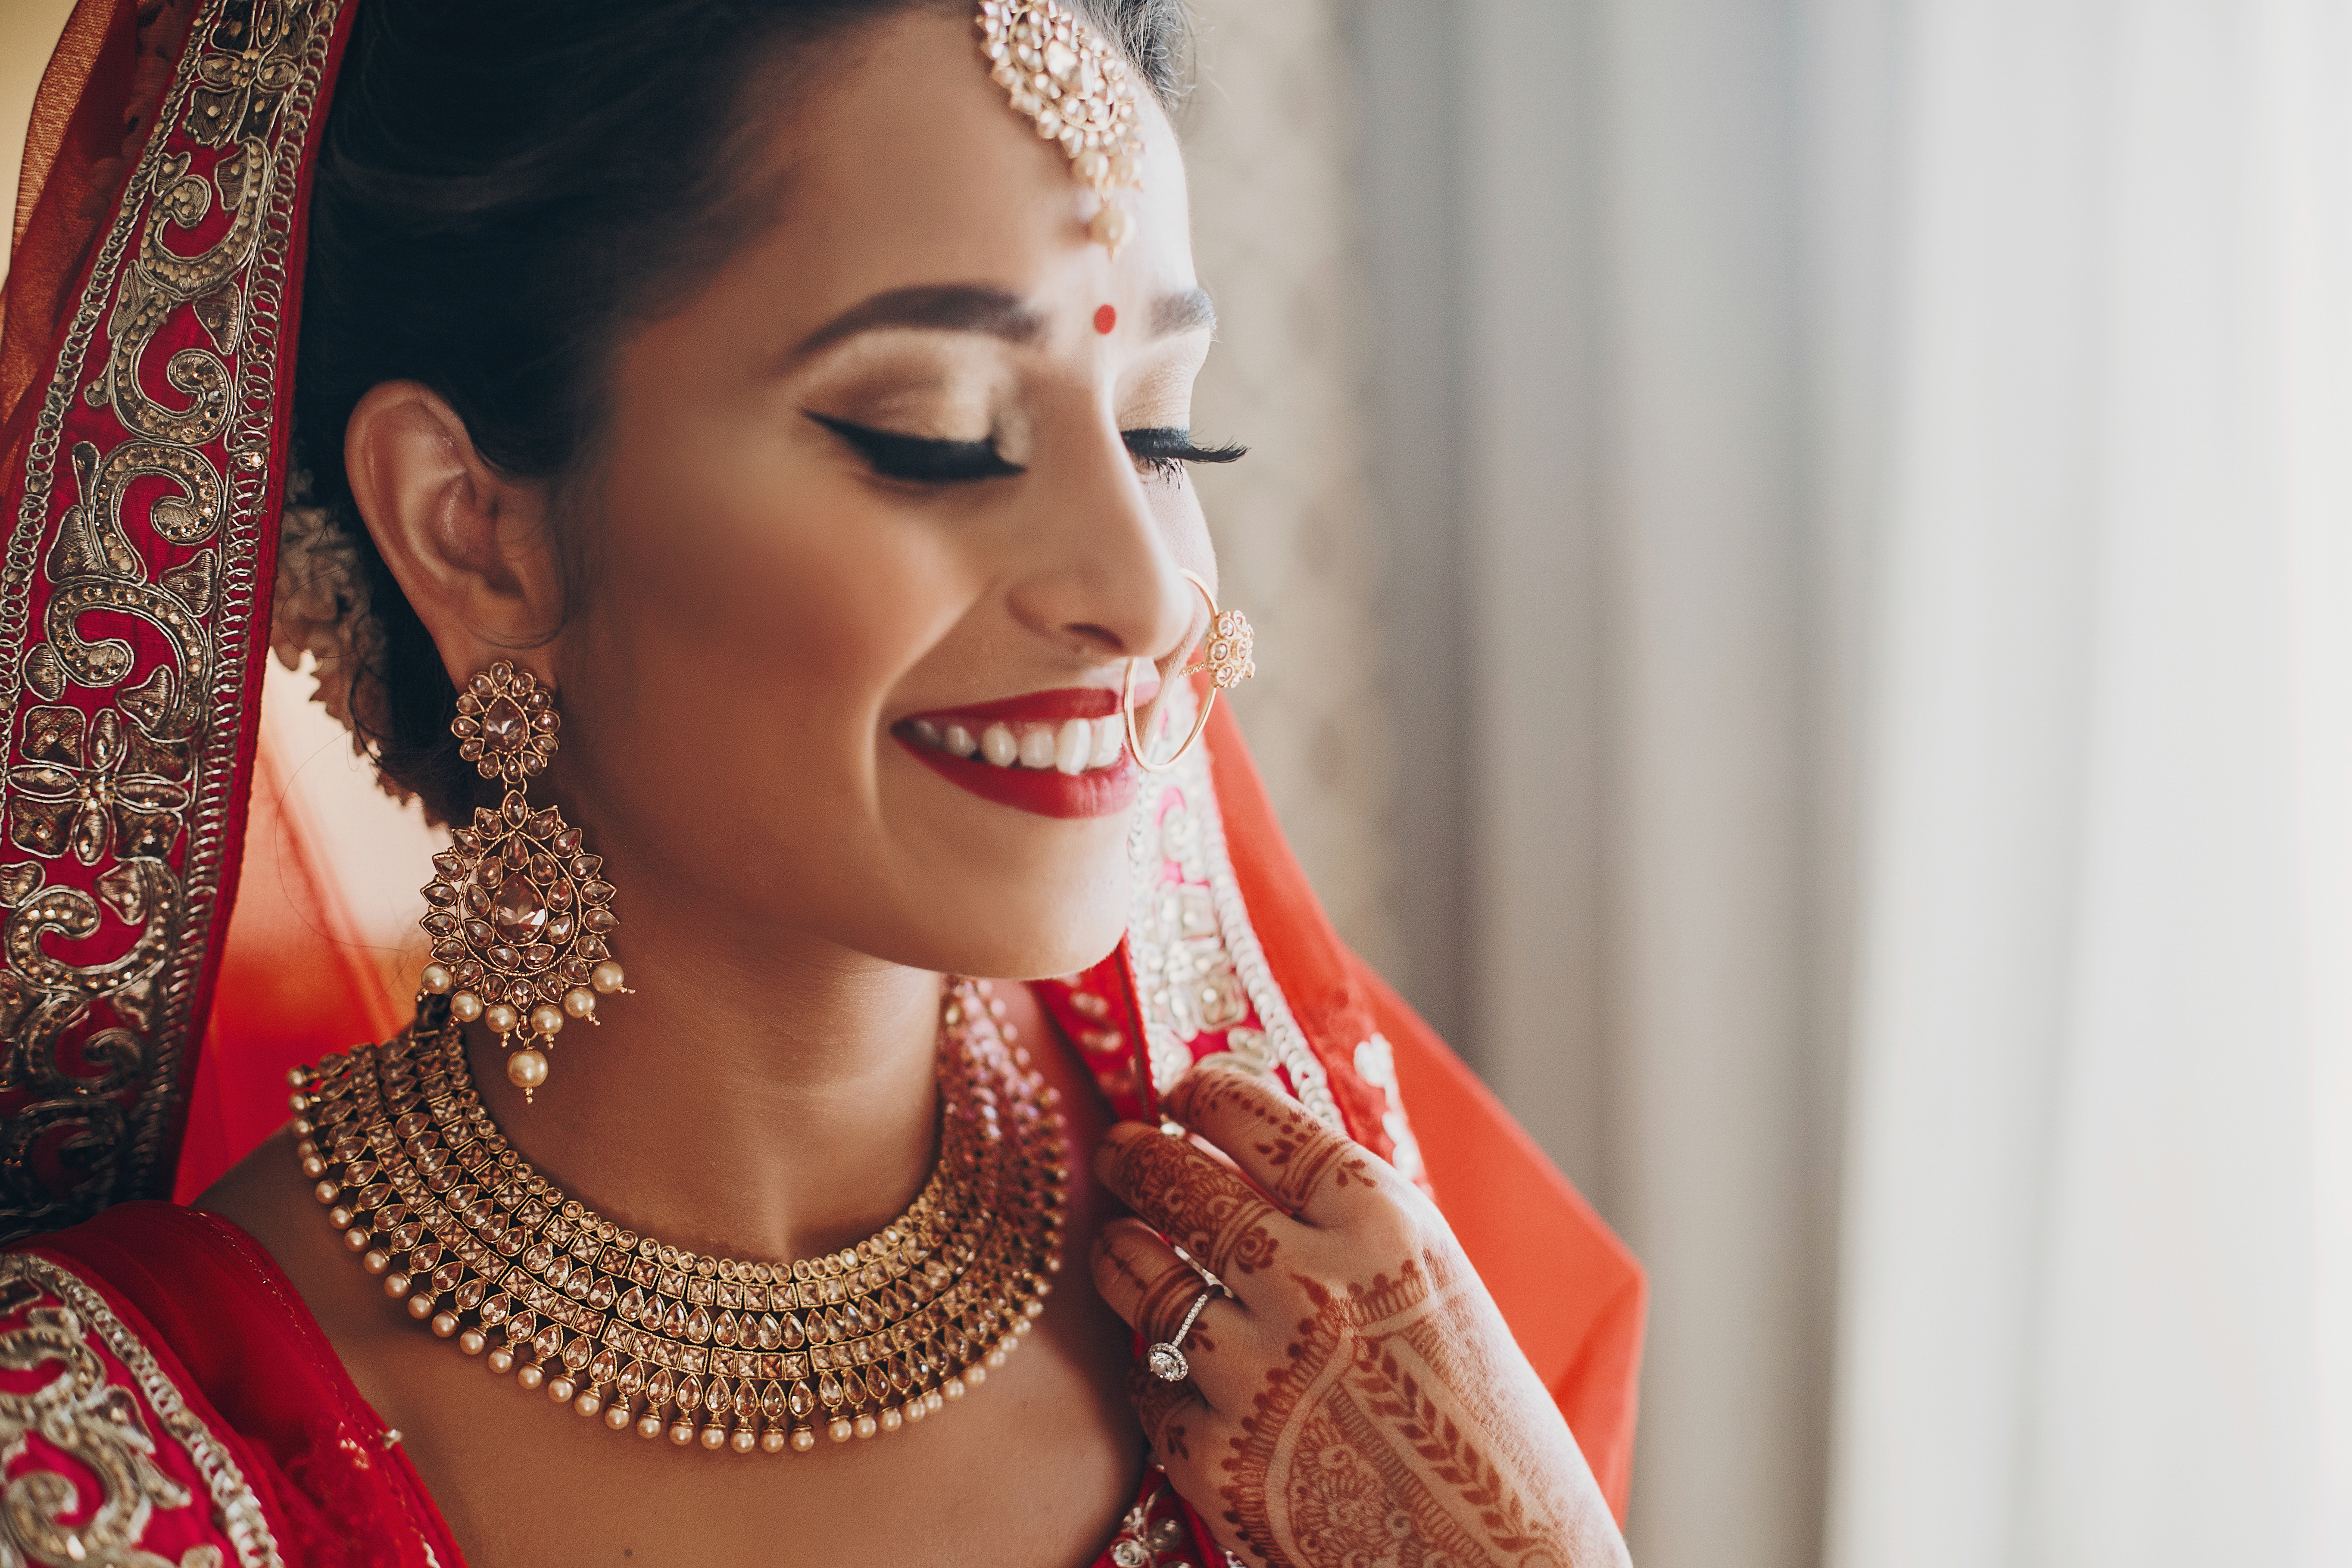 Une mariée heureuse | Source : Shutterstock